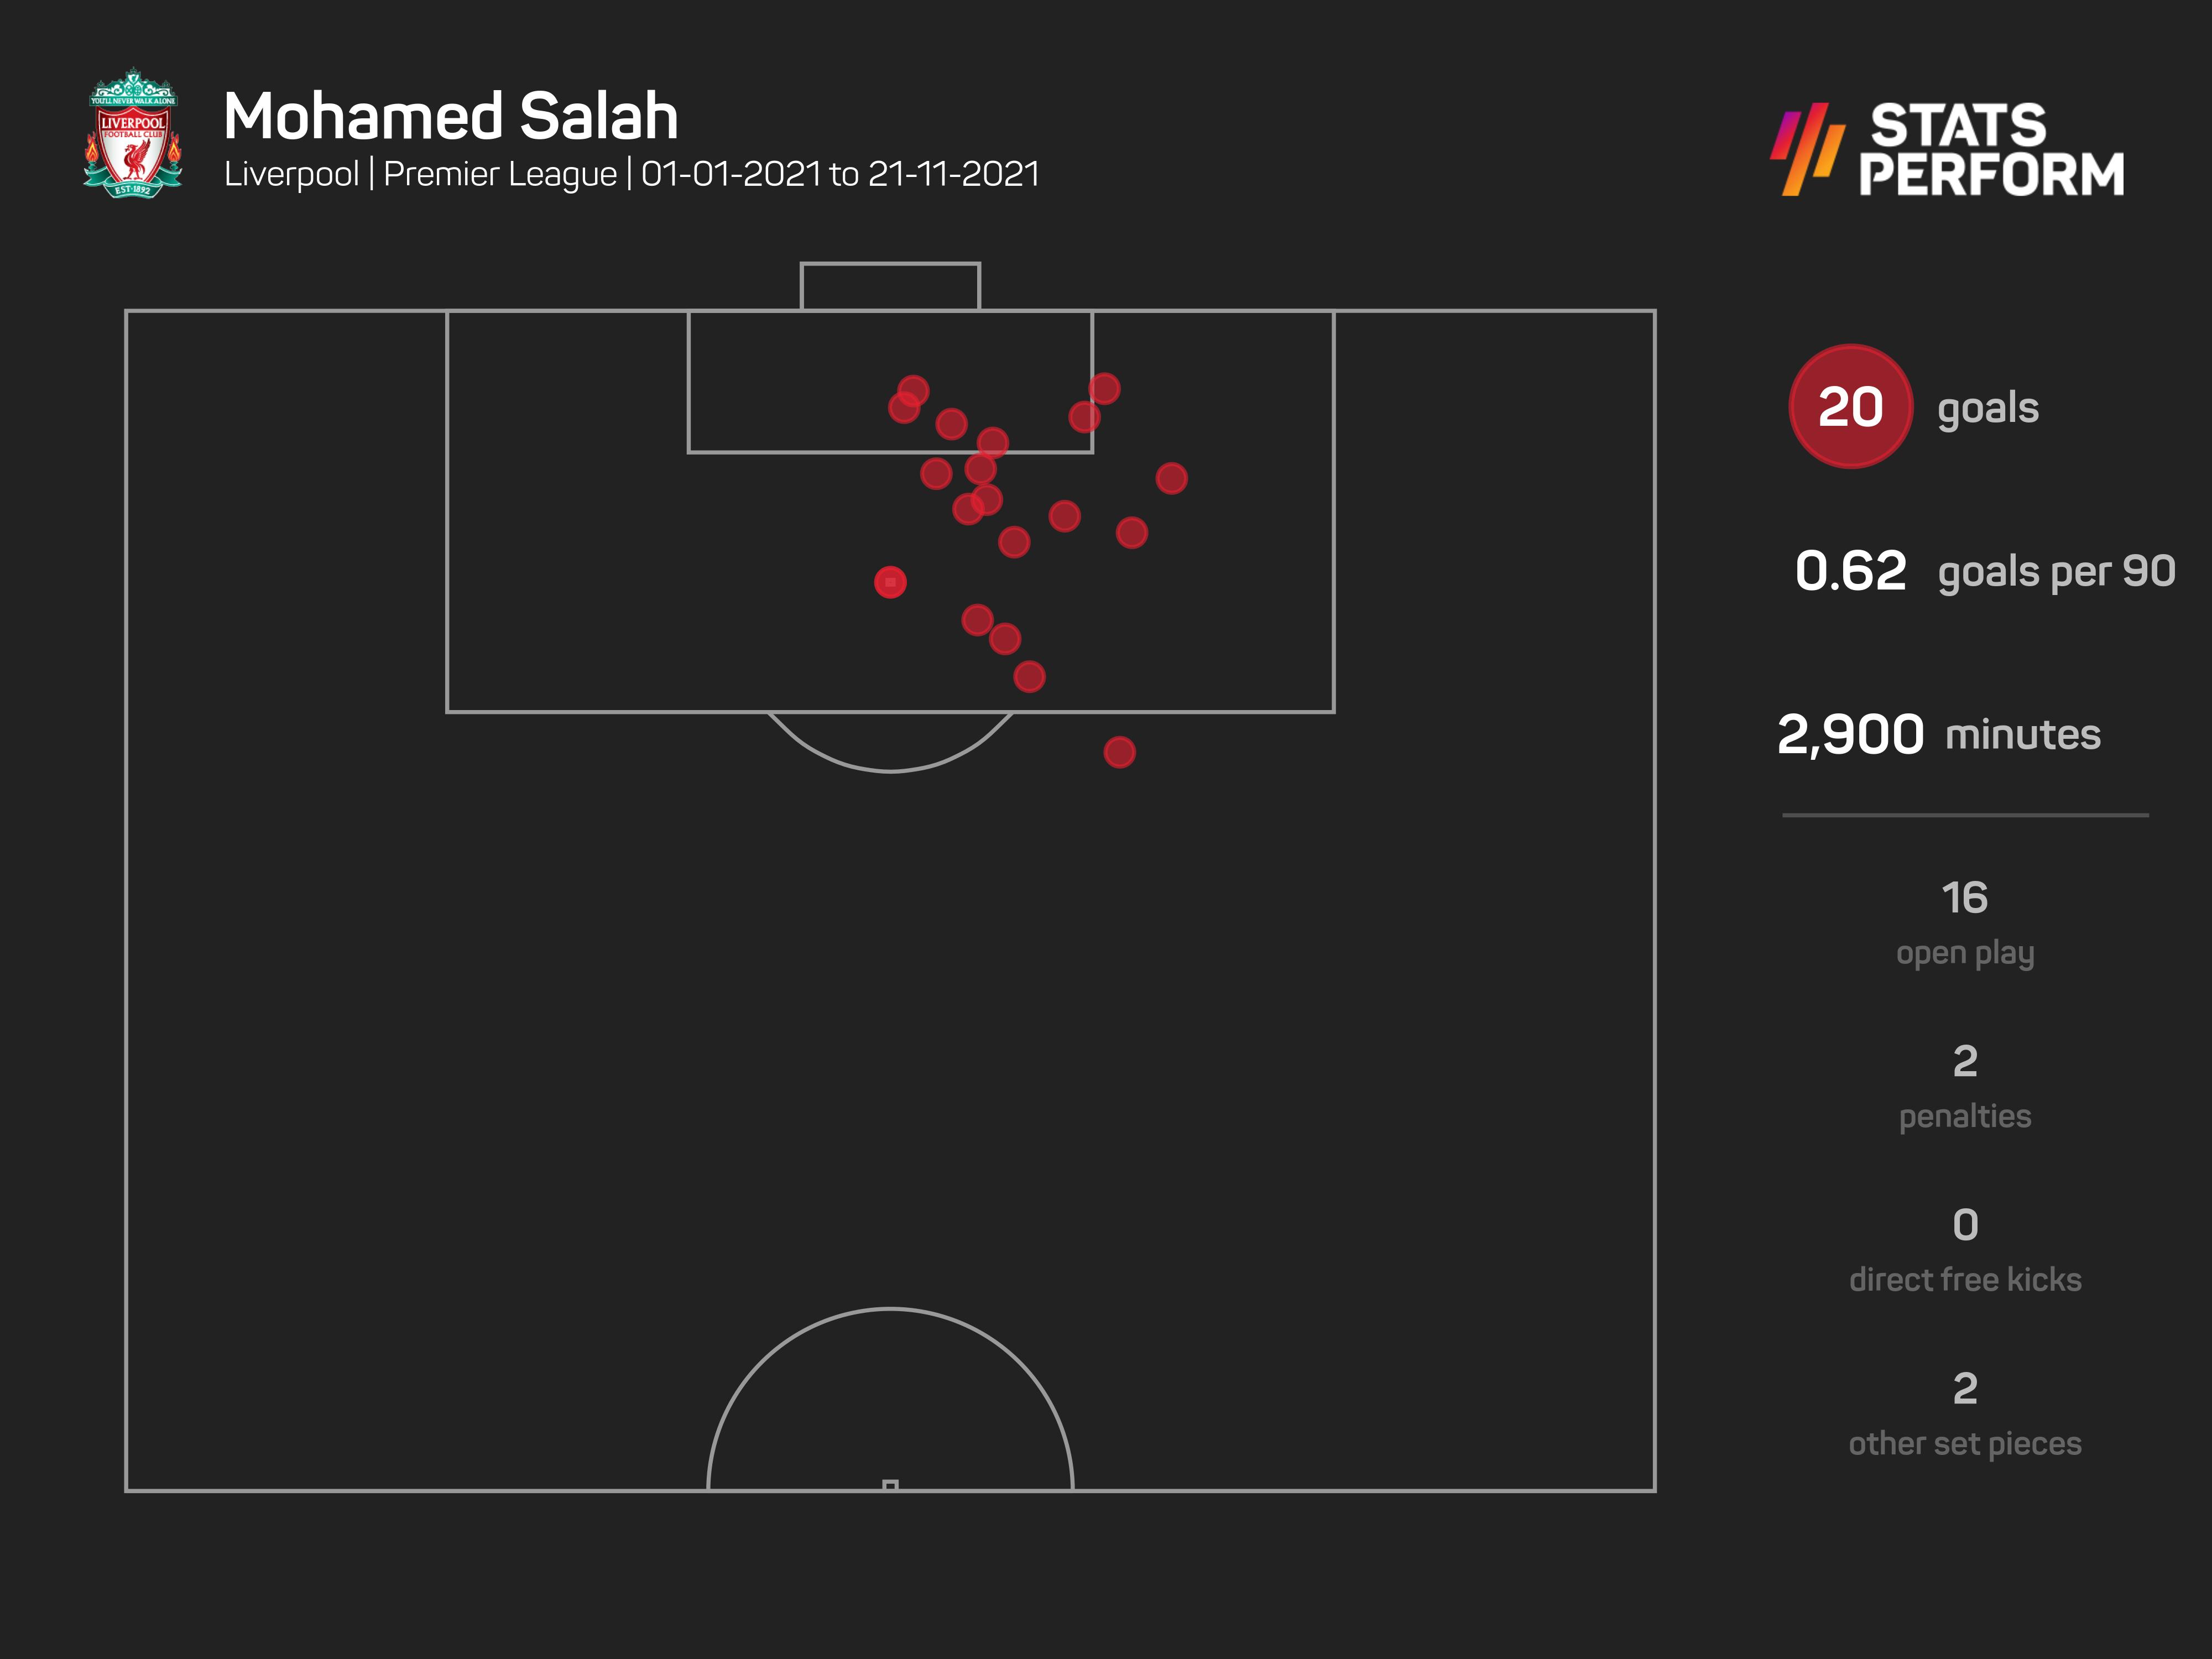 Mohamed Salah has been sensational in 2021